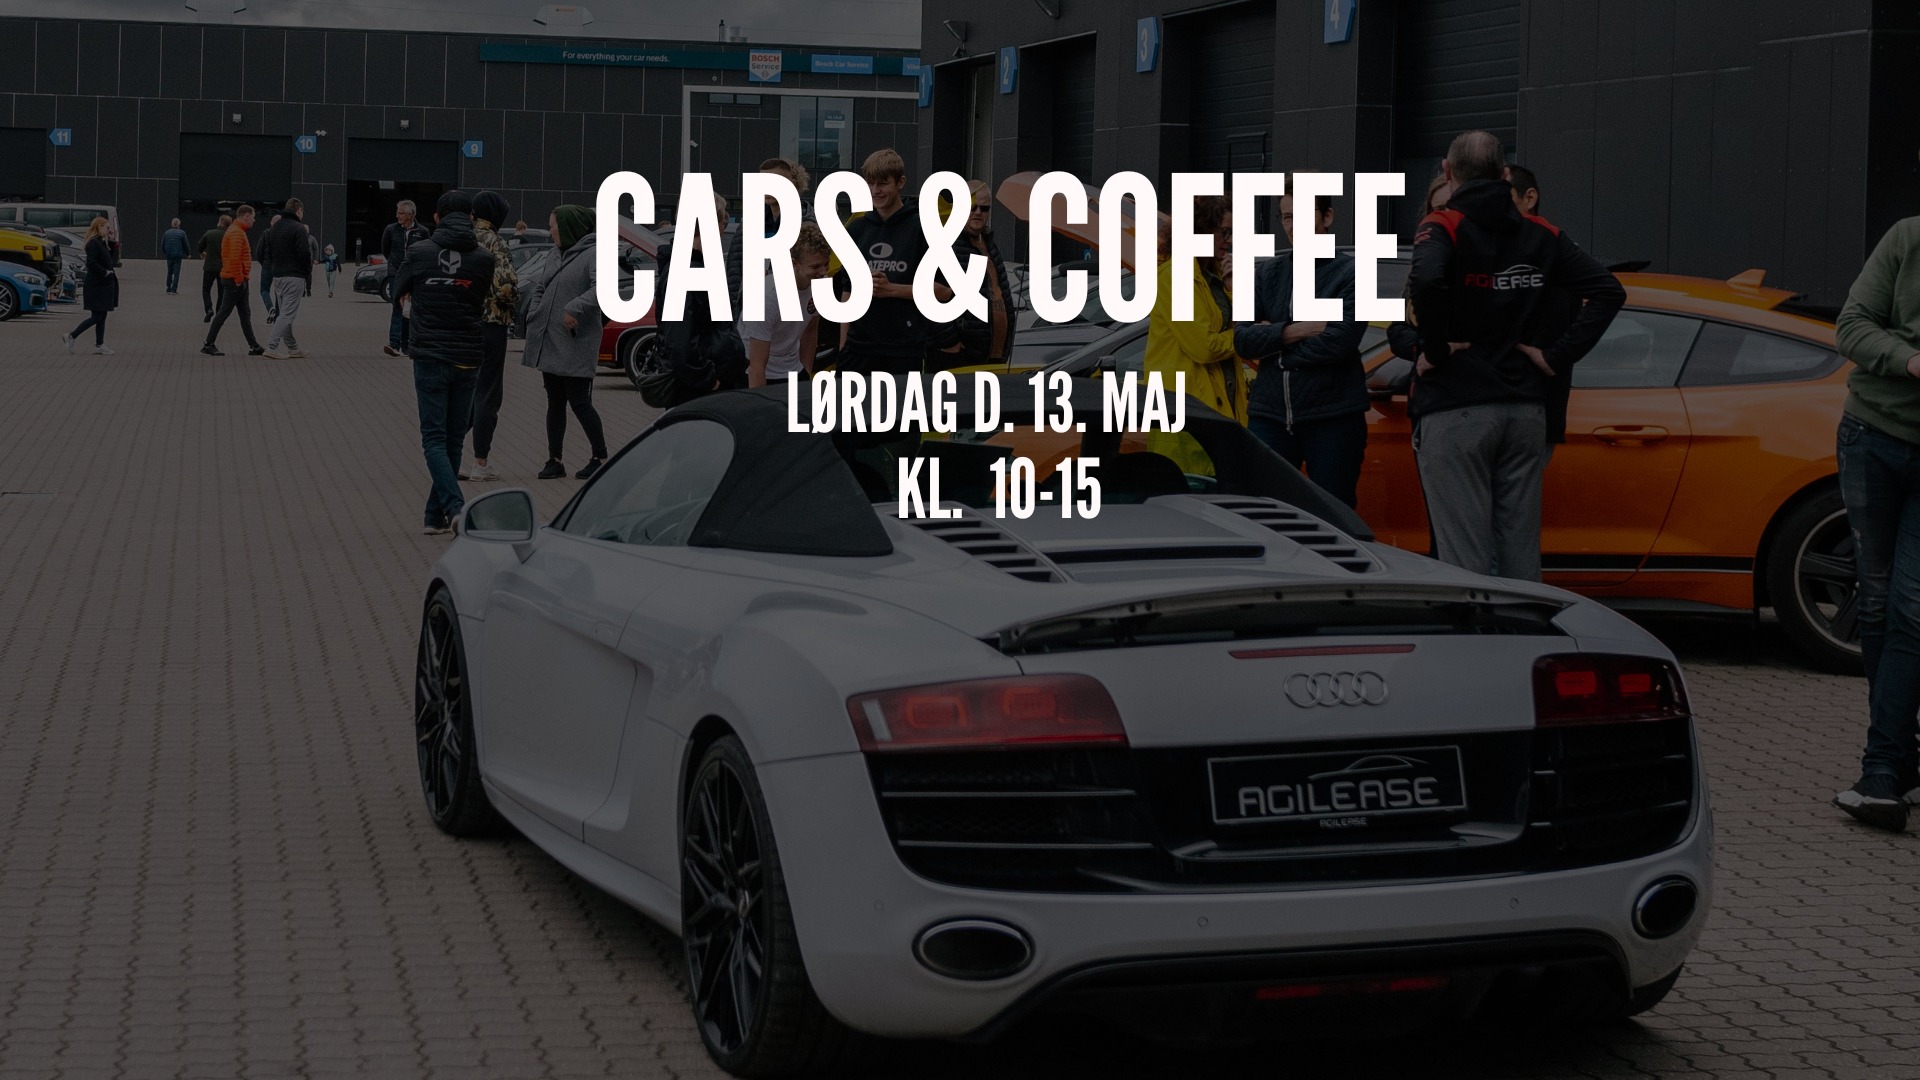 Cars & Coffee hos Agilease